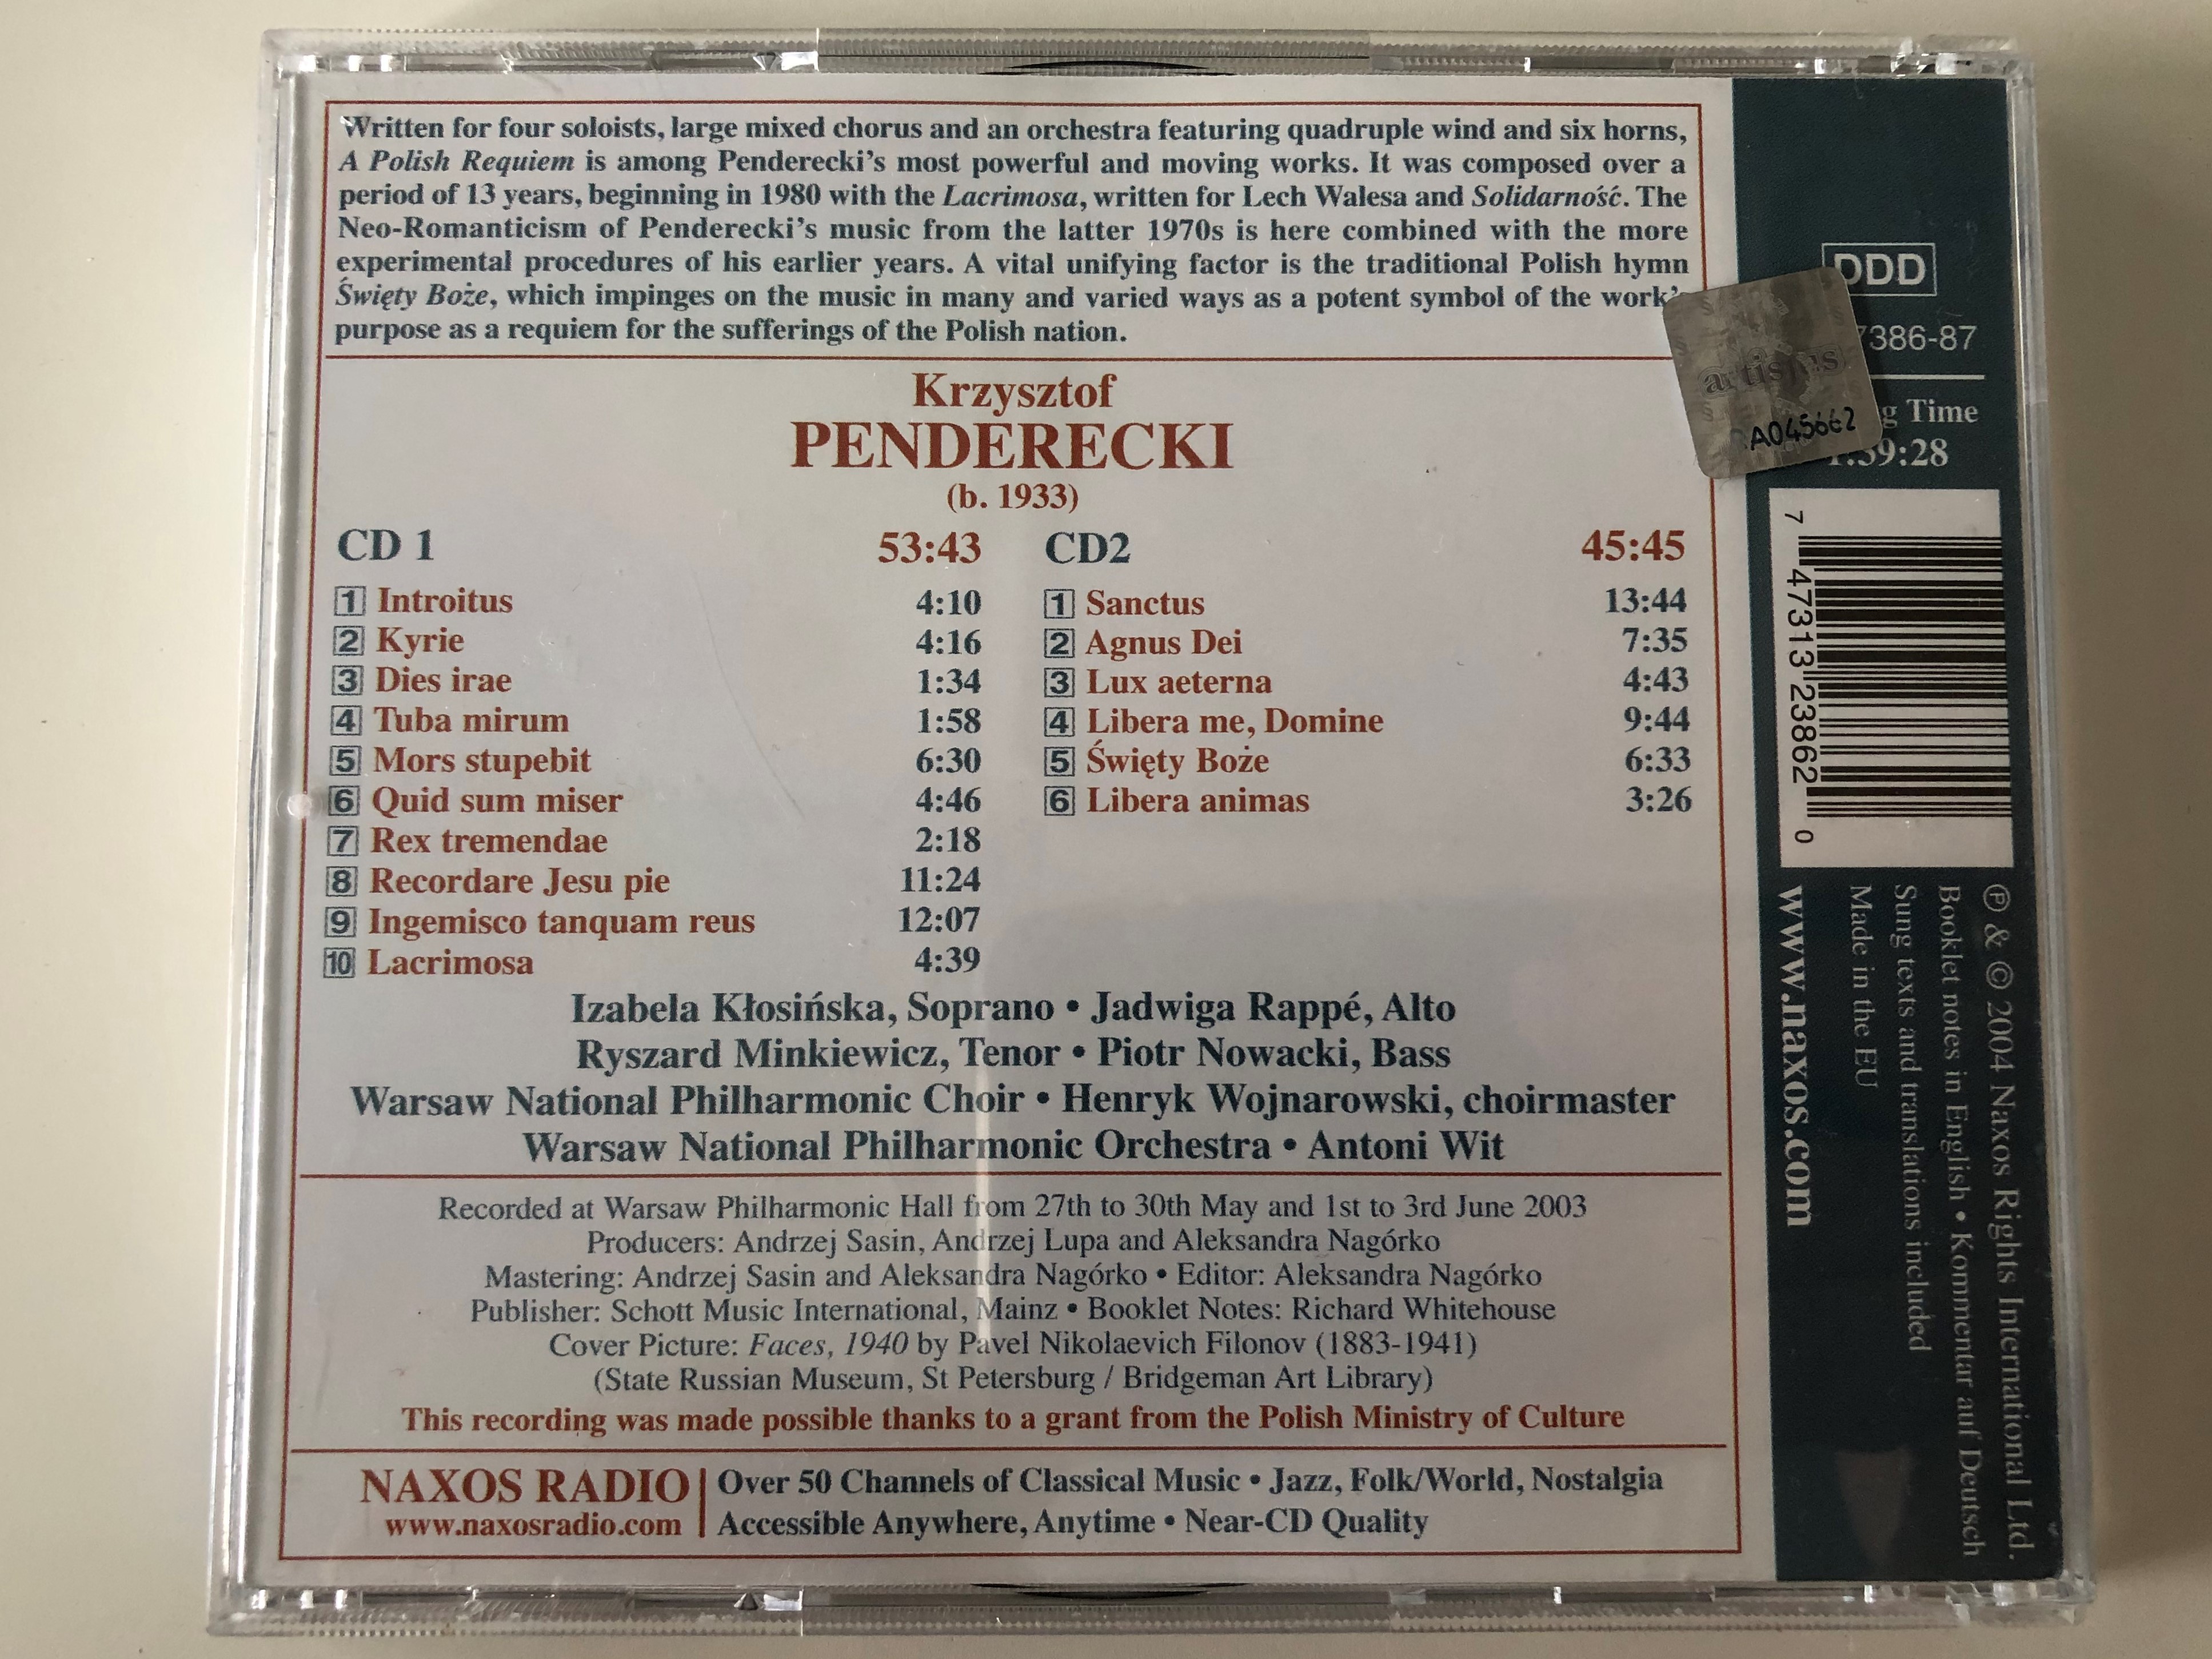 penderecki-a-polish-requiem-klosi-ska-rapp-minkiewicz-nowacki-warsaw-national-philharmonic-choir-and-orchestra-antoni-wit-naxos-2x-audio-cd-2004-8-9-.jpg